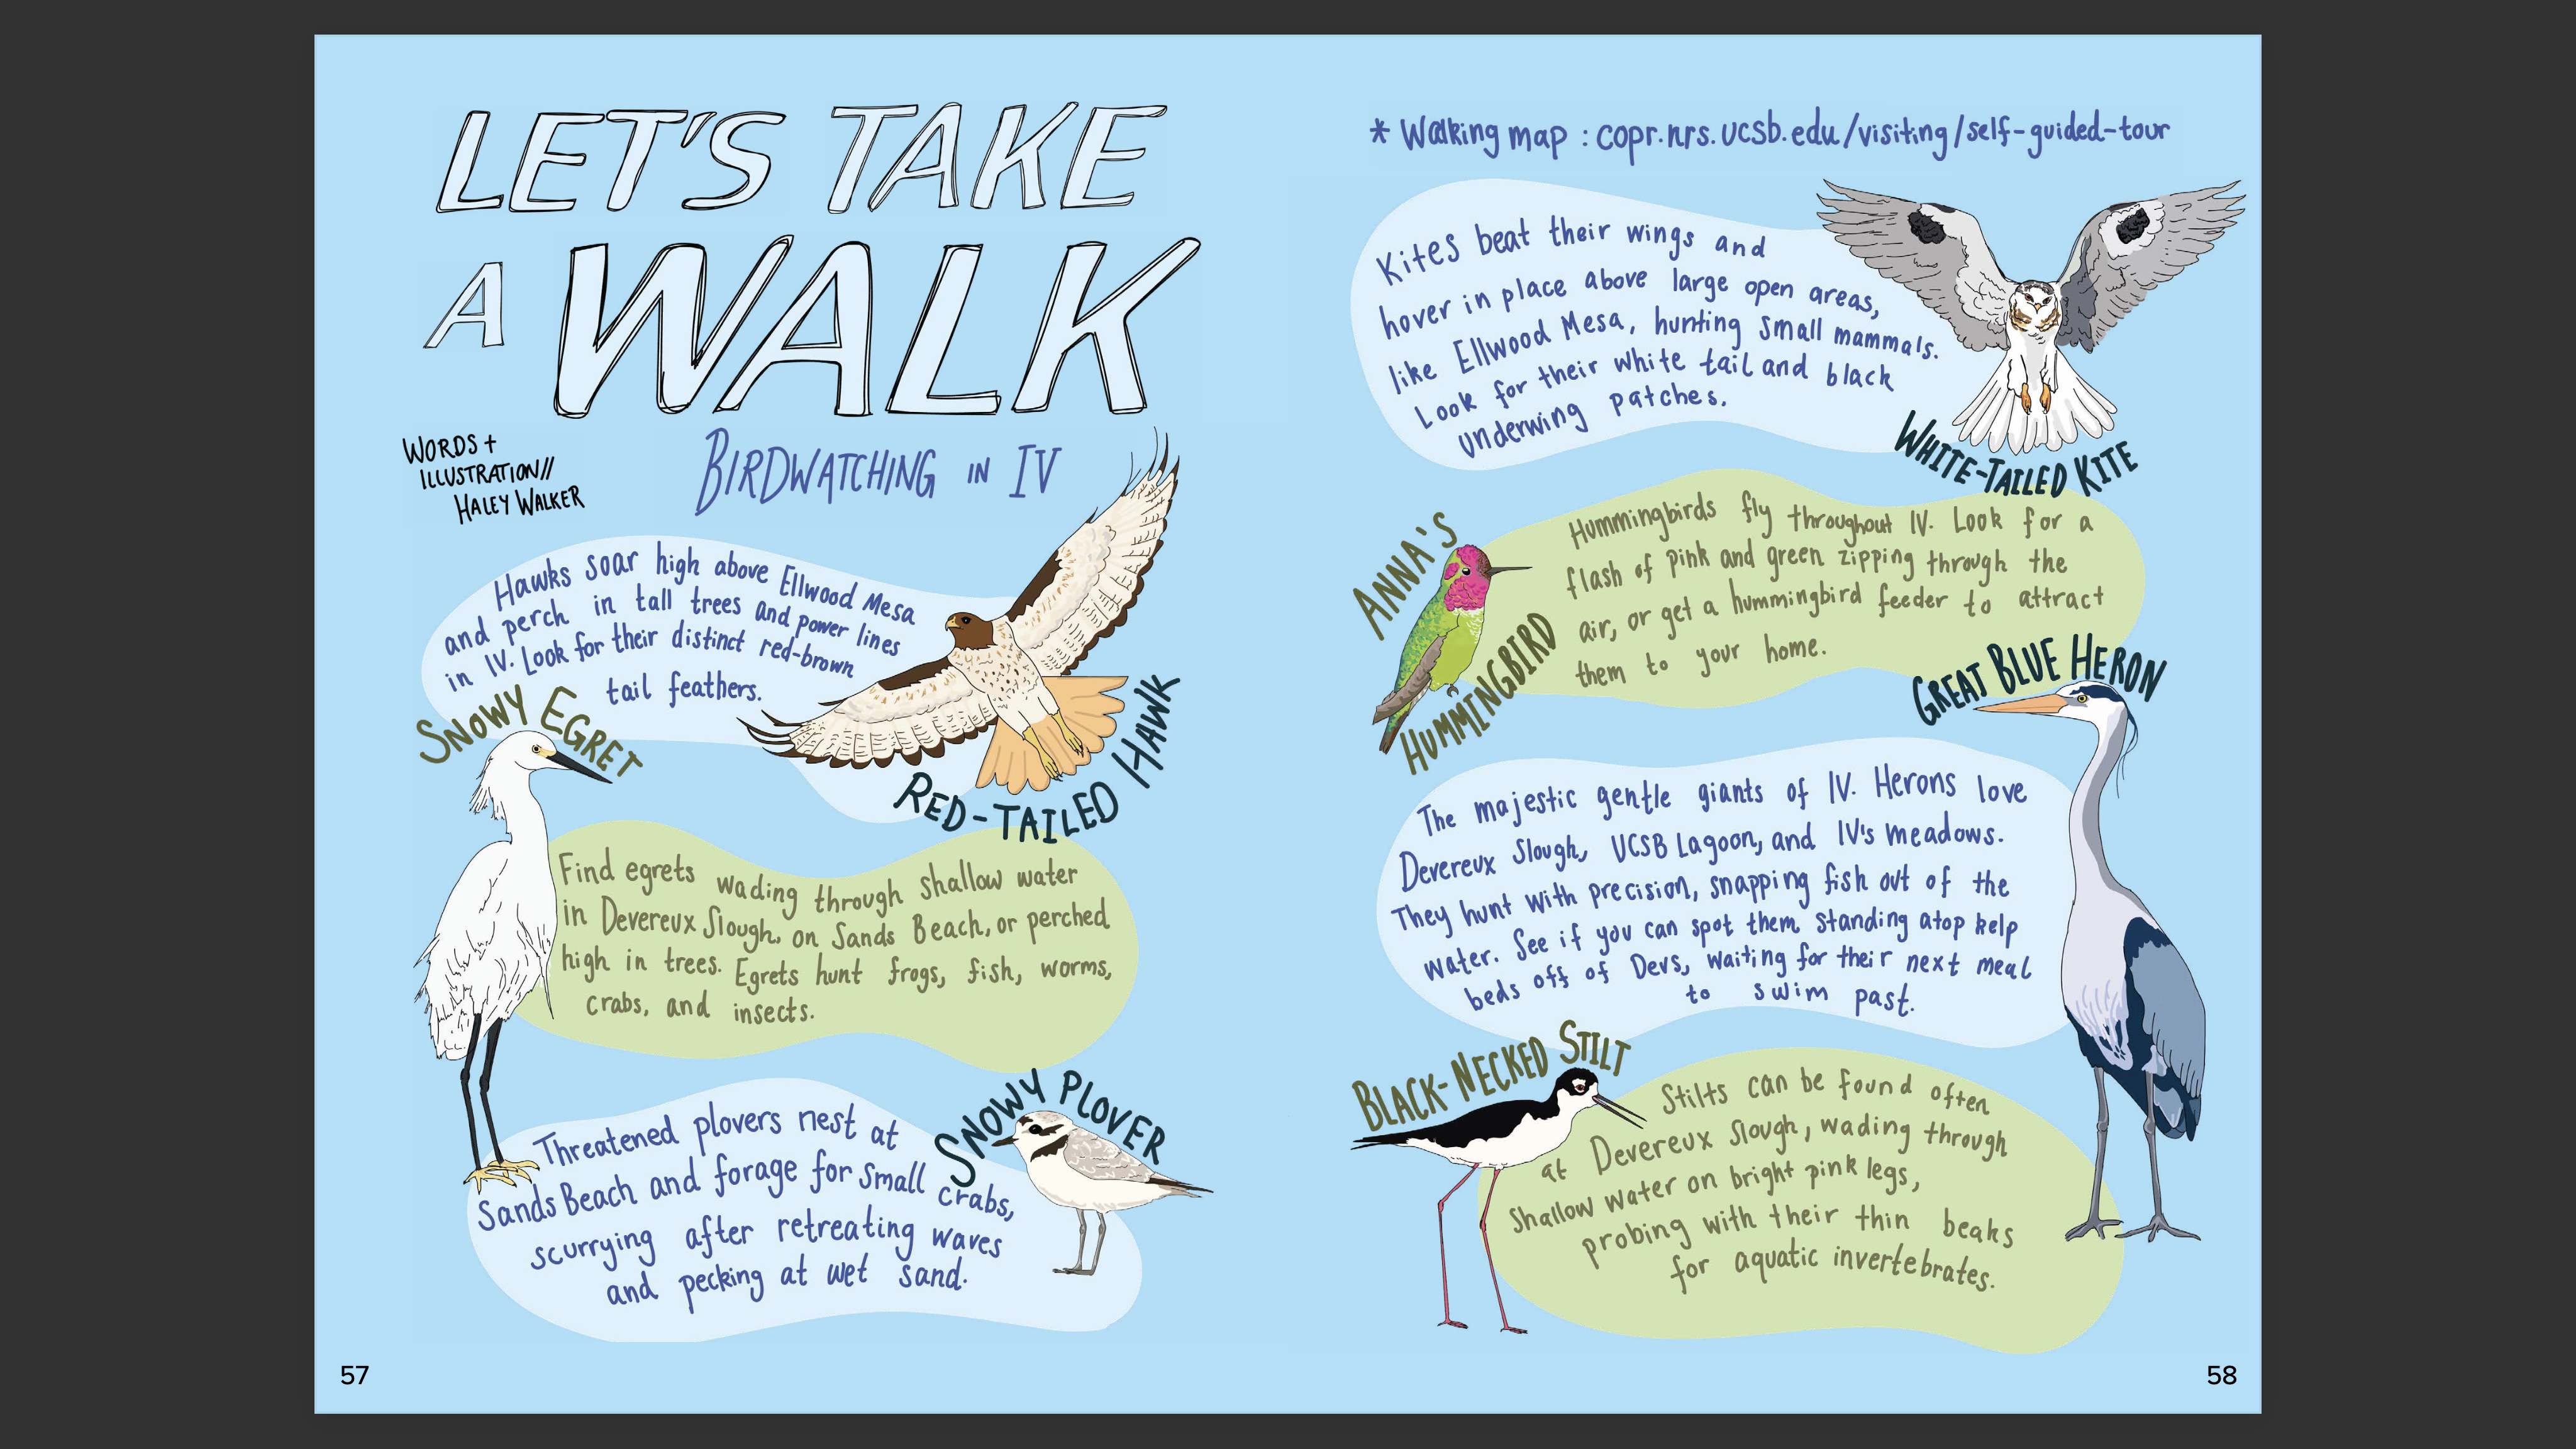 Haley Walker’s article on Birdwatching in Isla Vista wins 1st Place